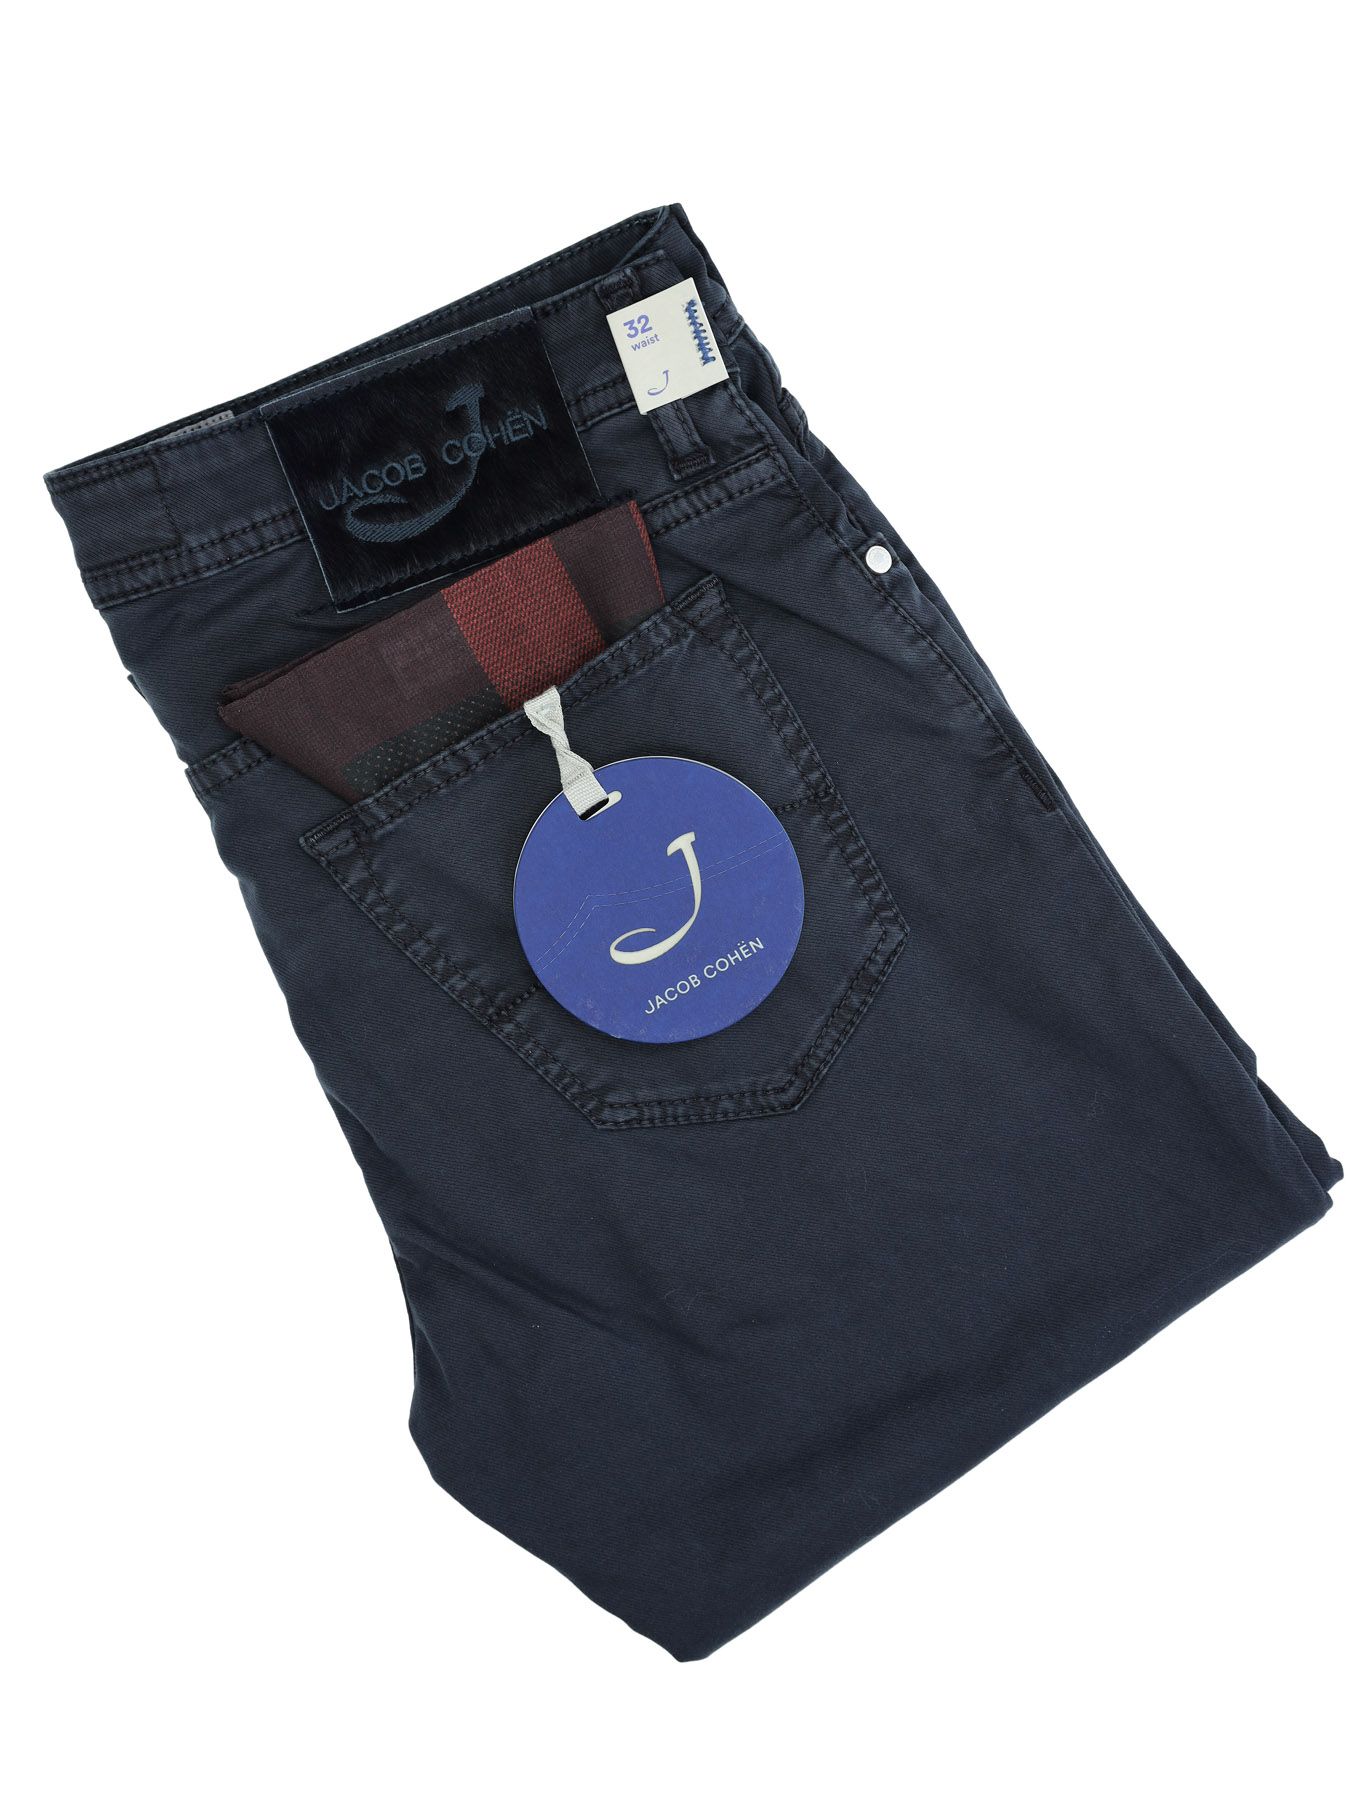 Jeans 688 comfort tricotina di cotone e lyocel strecht